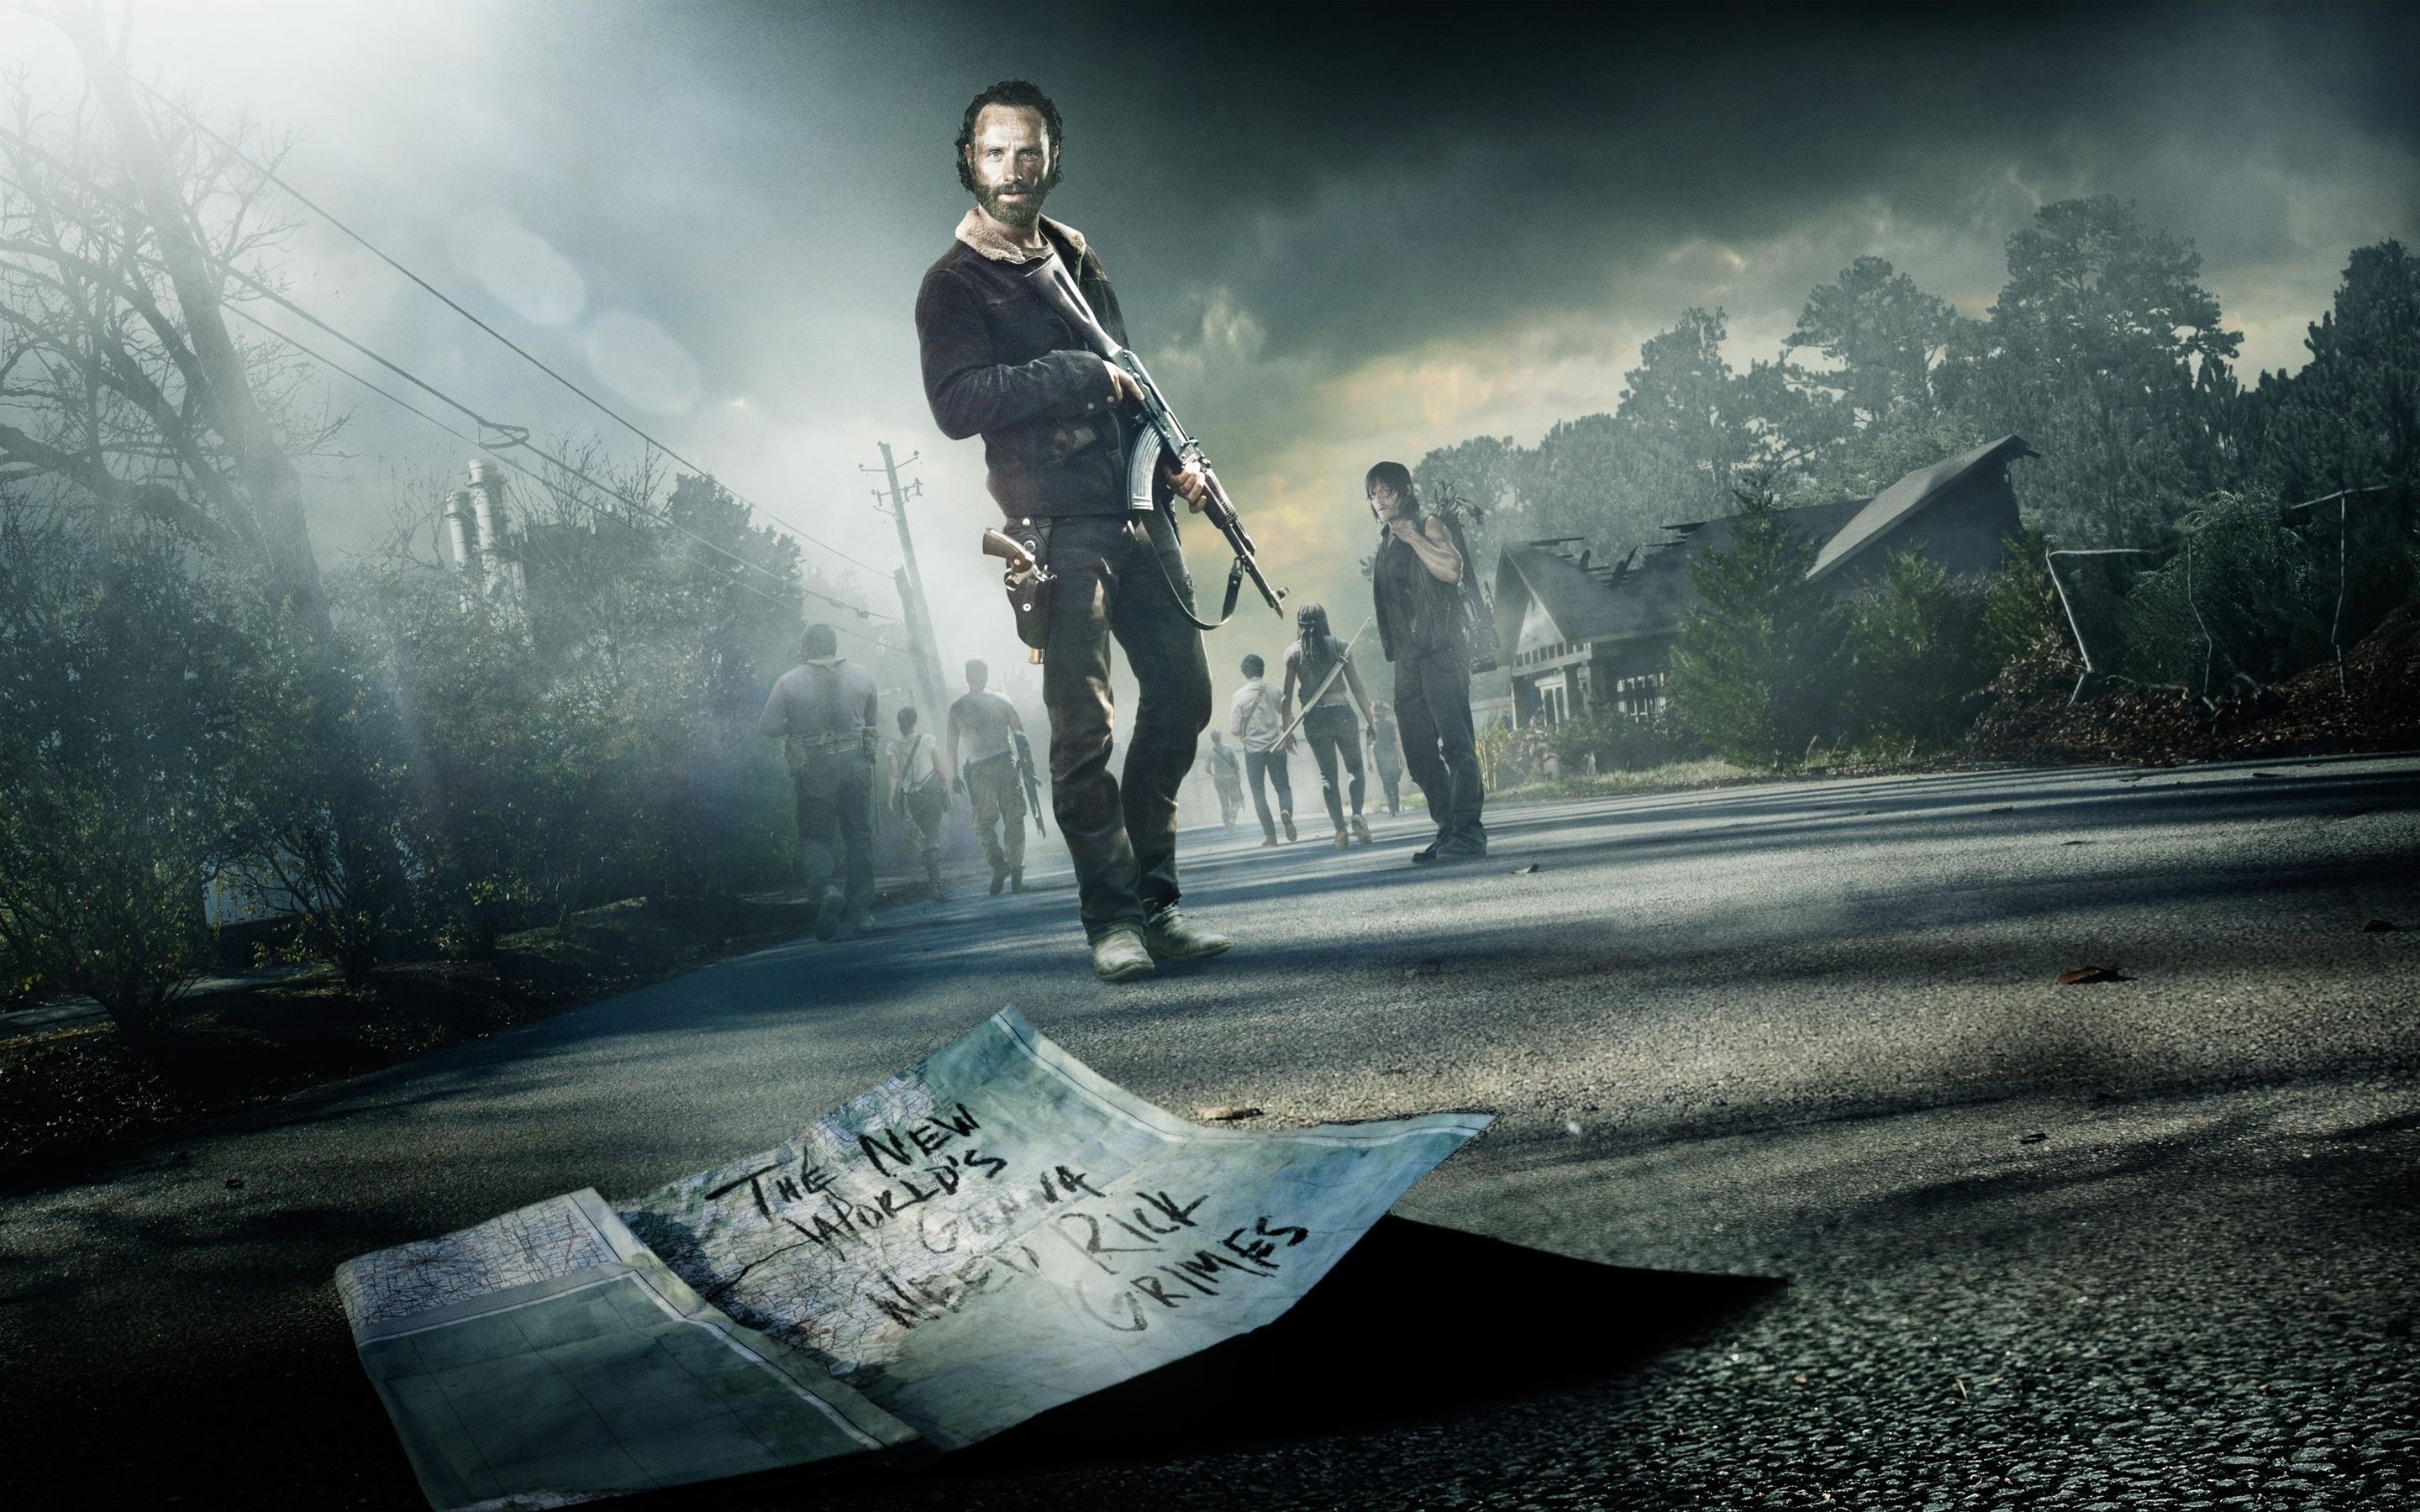 The Walking Dead HD wallpapers free download